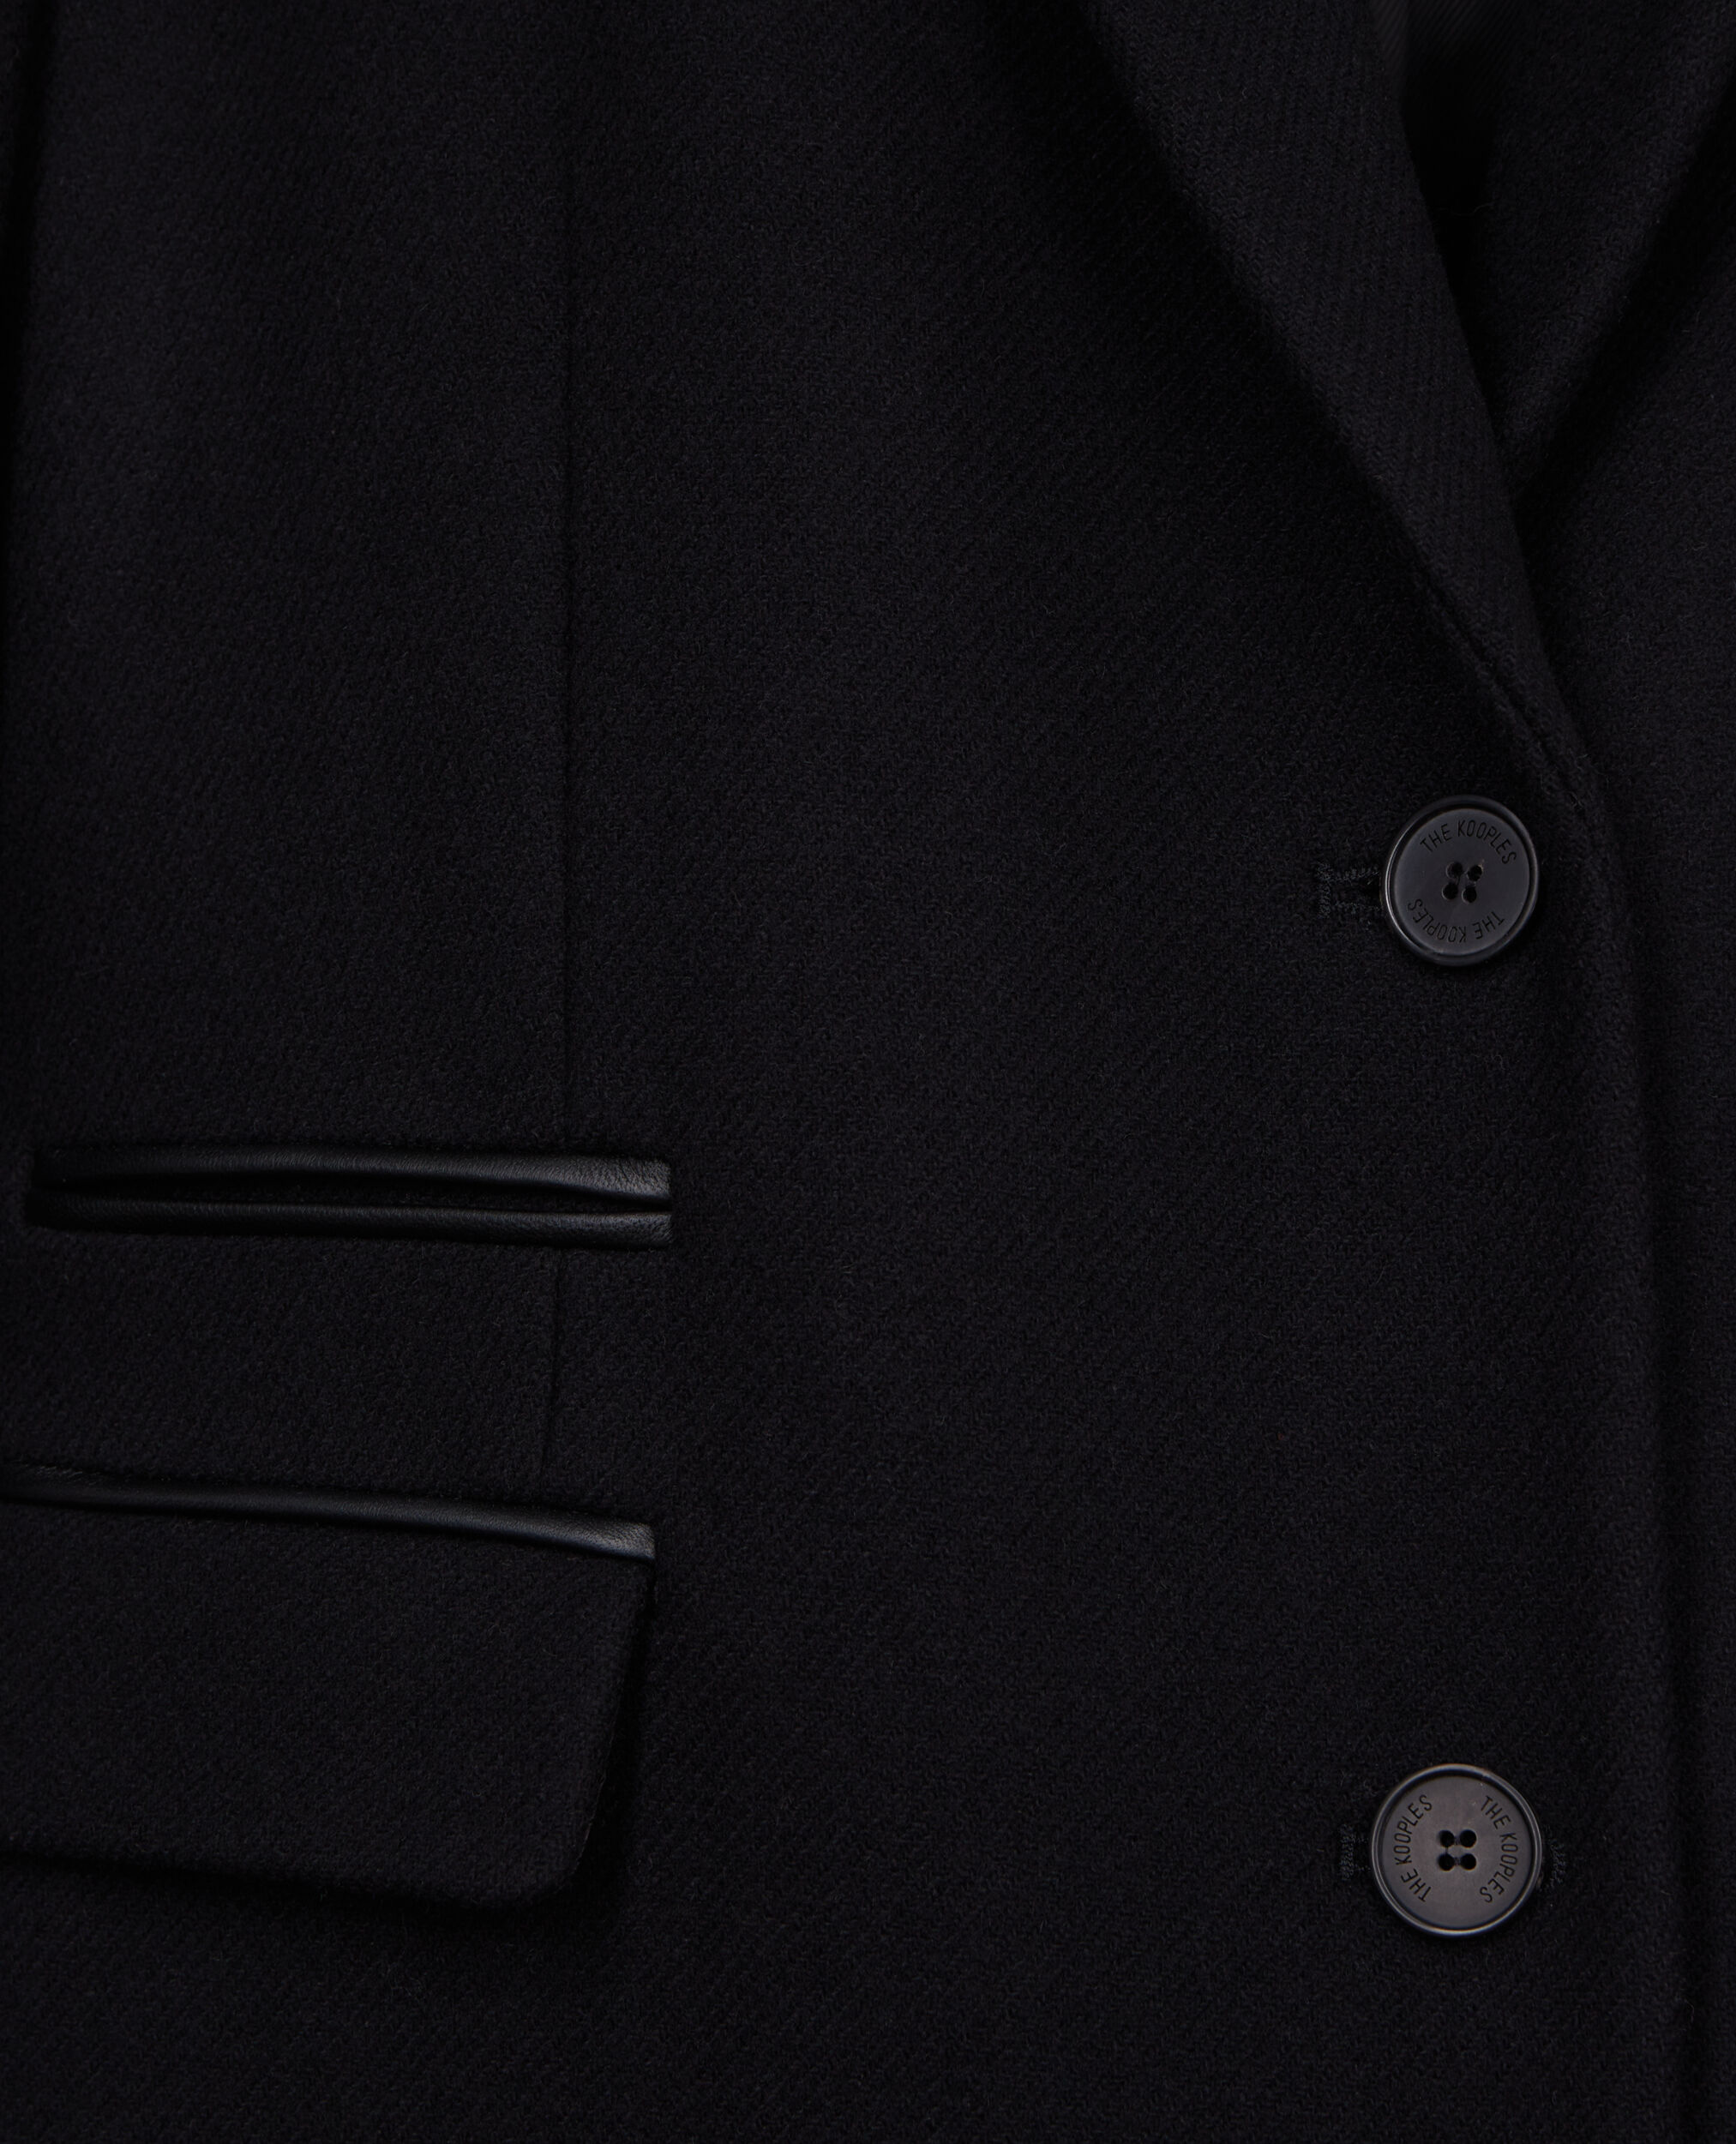 Abrigo largo negro mezcla lana, BLACK, hi-res image number null